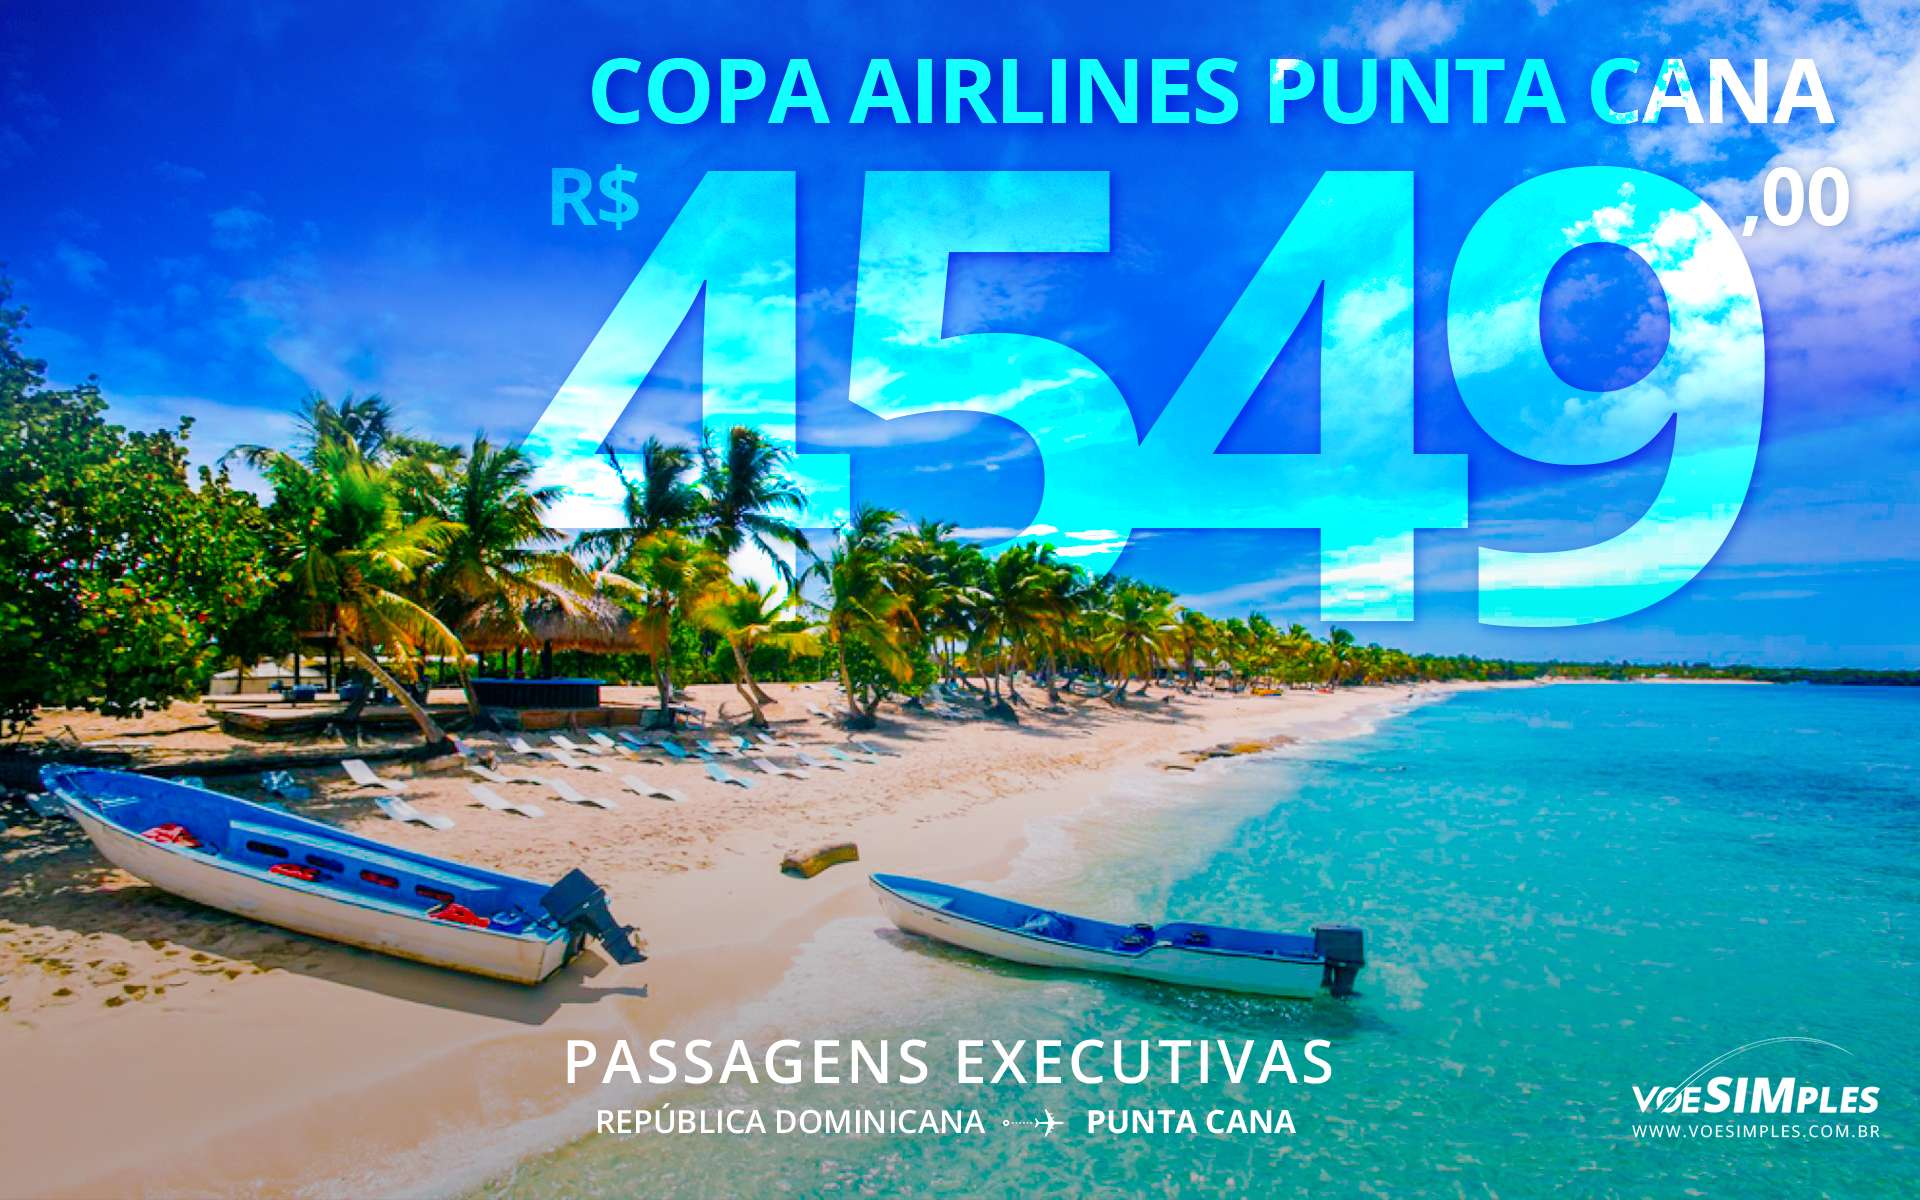 Passagem aérea executiva Copa Airlines